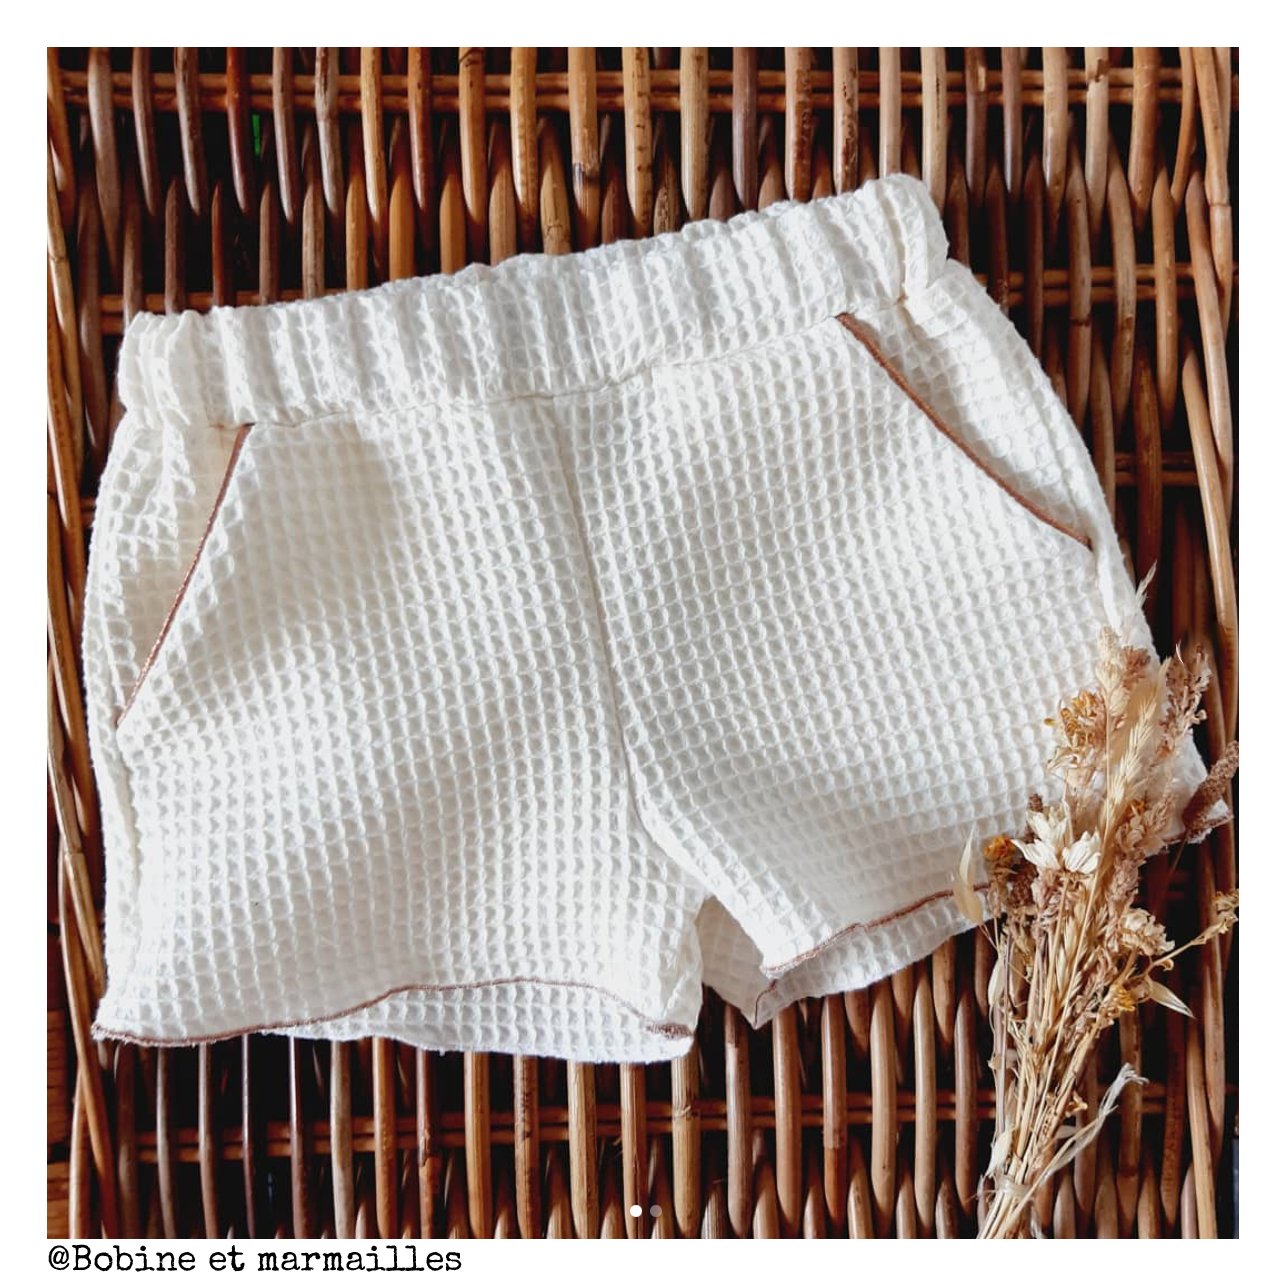 Ikatee - DAKAR pants or shortpants - Age 3 - 12 Years - Paper Sewing Pattern